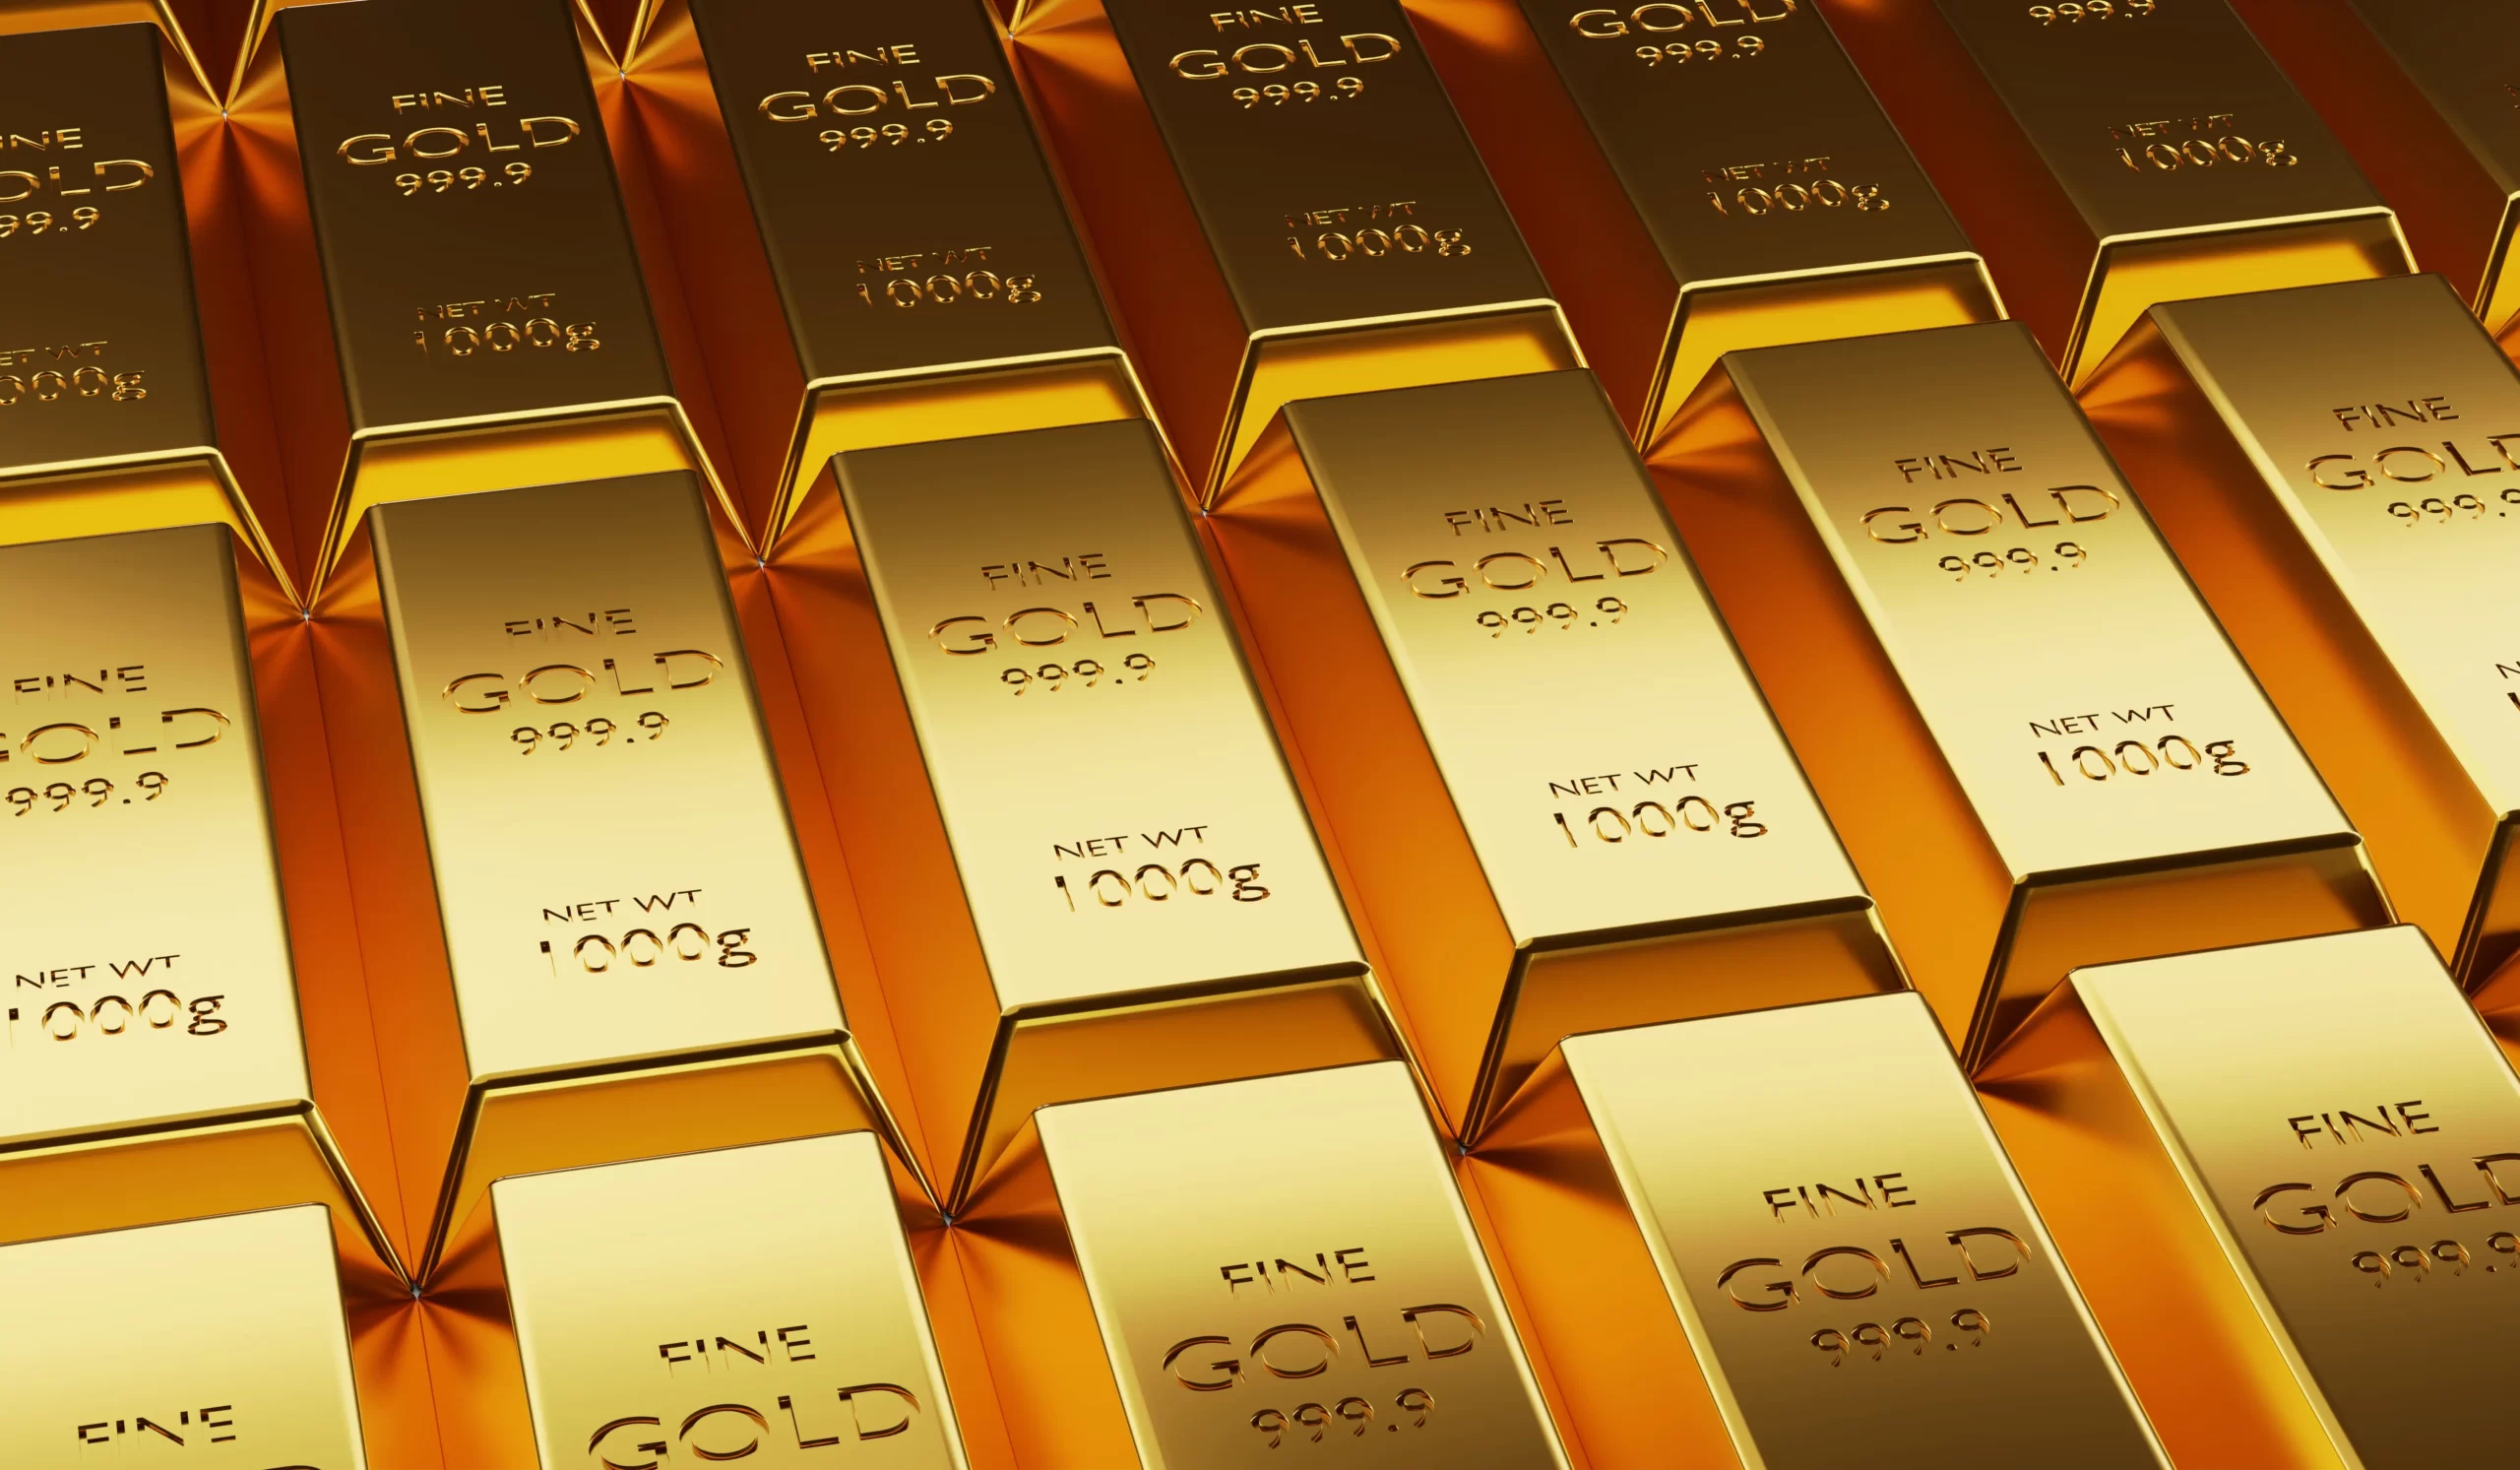 Hong Kong Surpasses Dubai as Top Hub for Russian Gold Trading Amid Regulatory Changes